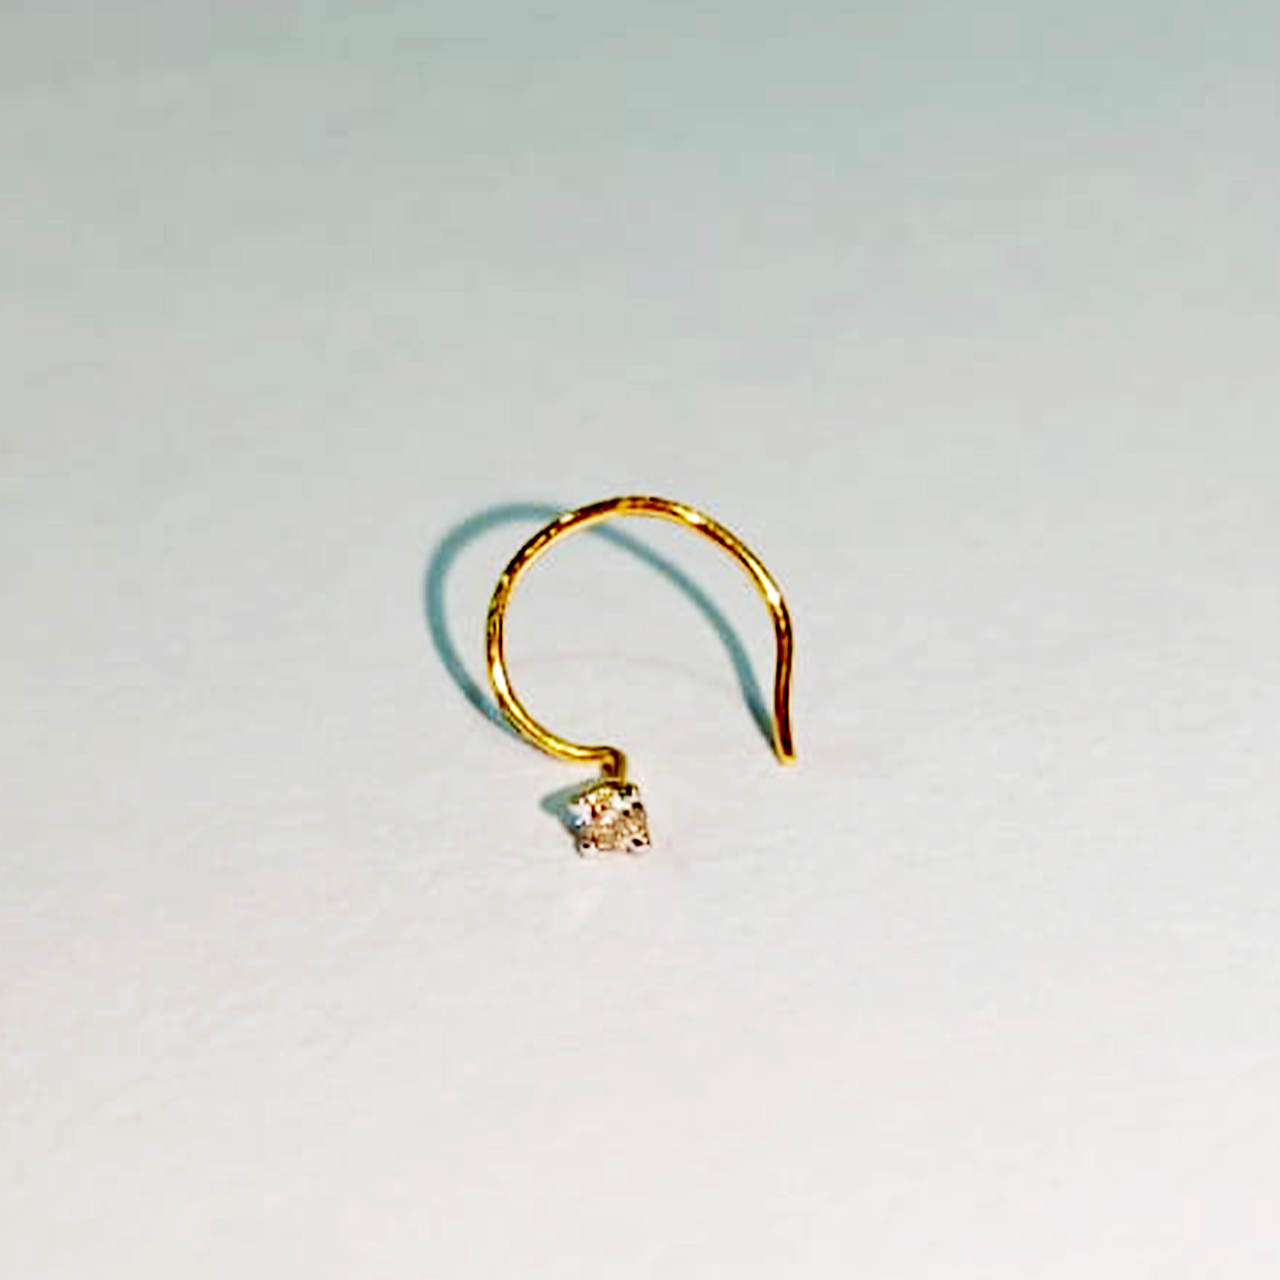 Buy KuberBox 18K Chuks Bezel Diamond Nose Ring for Women and Girls online